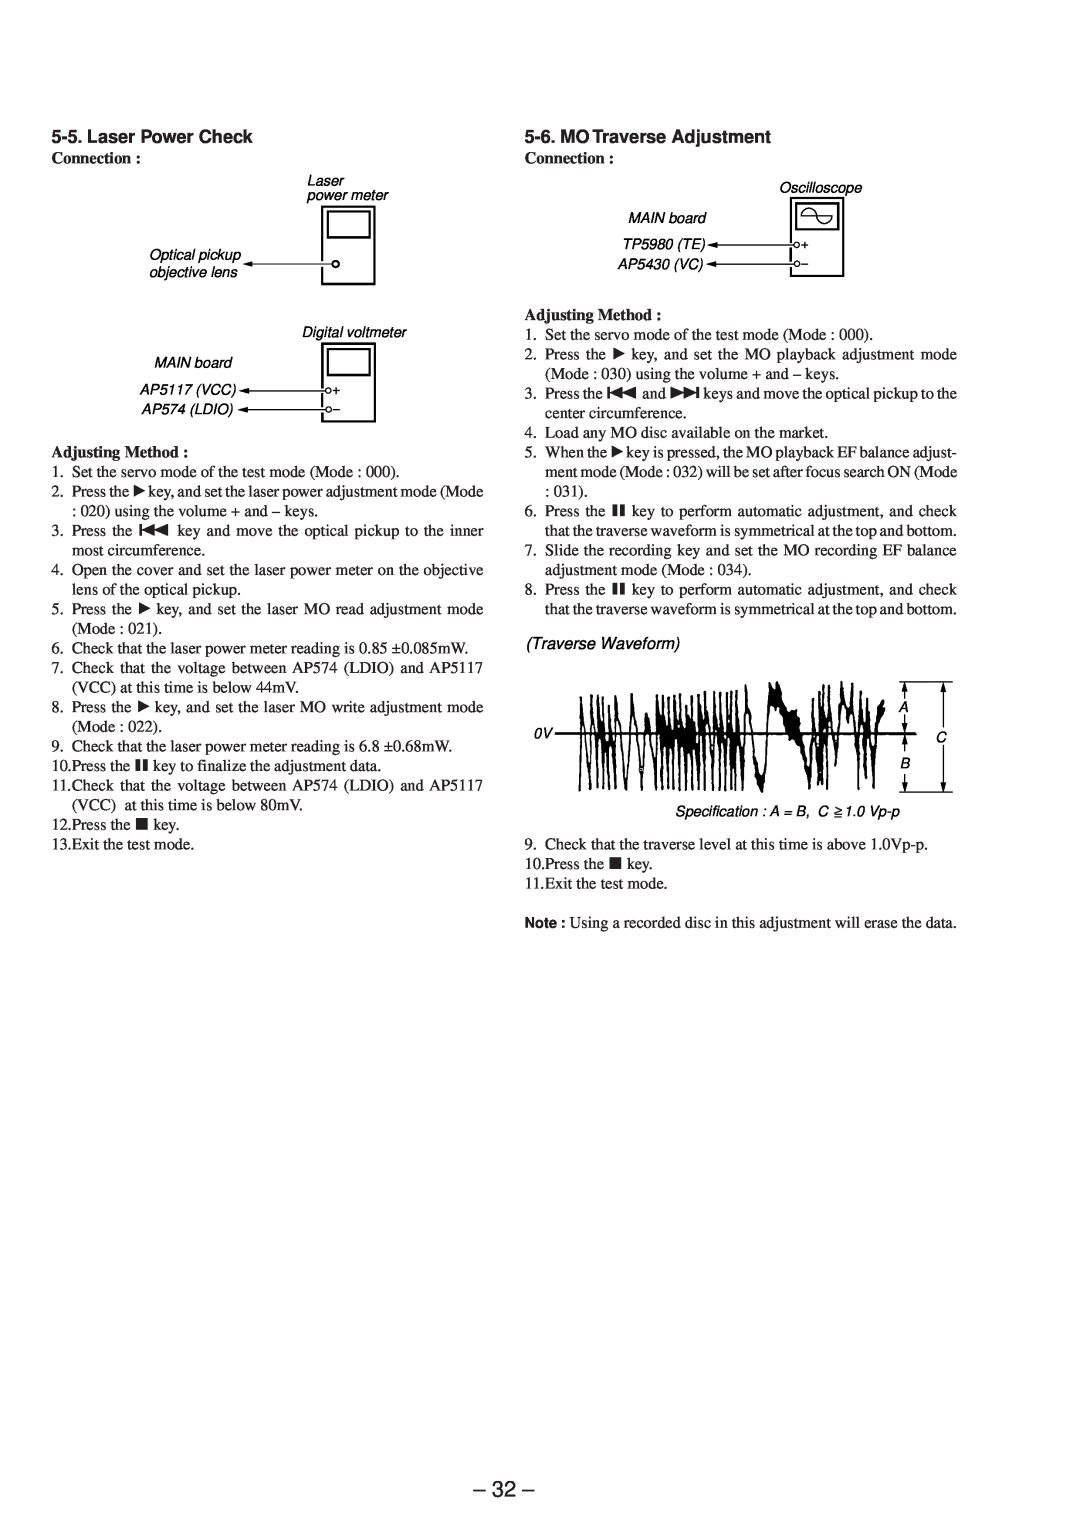 Sony MZ-R50 service manual Connection, Adjusting Method, Traverse Waveform 